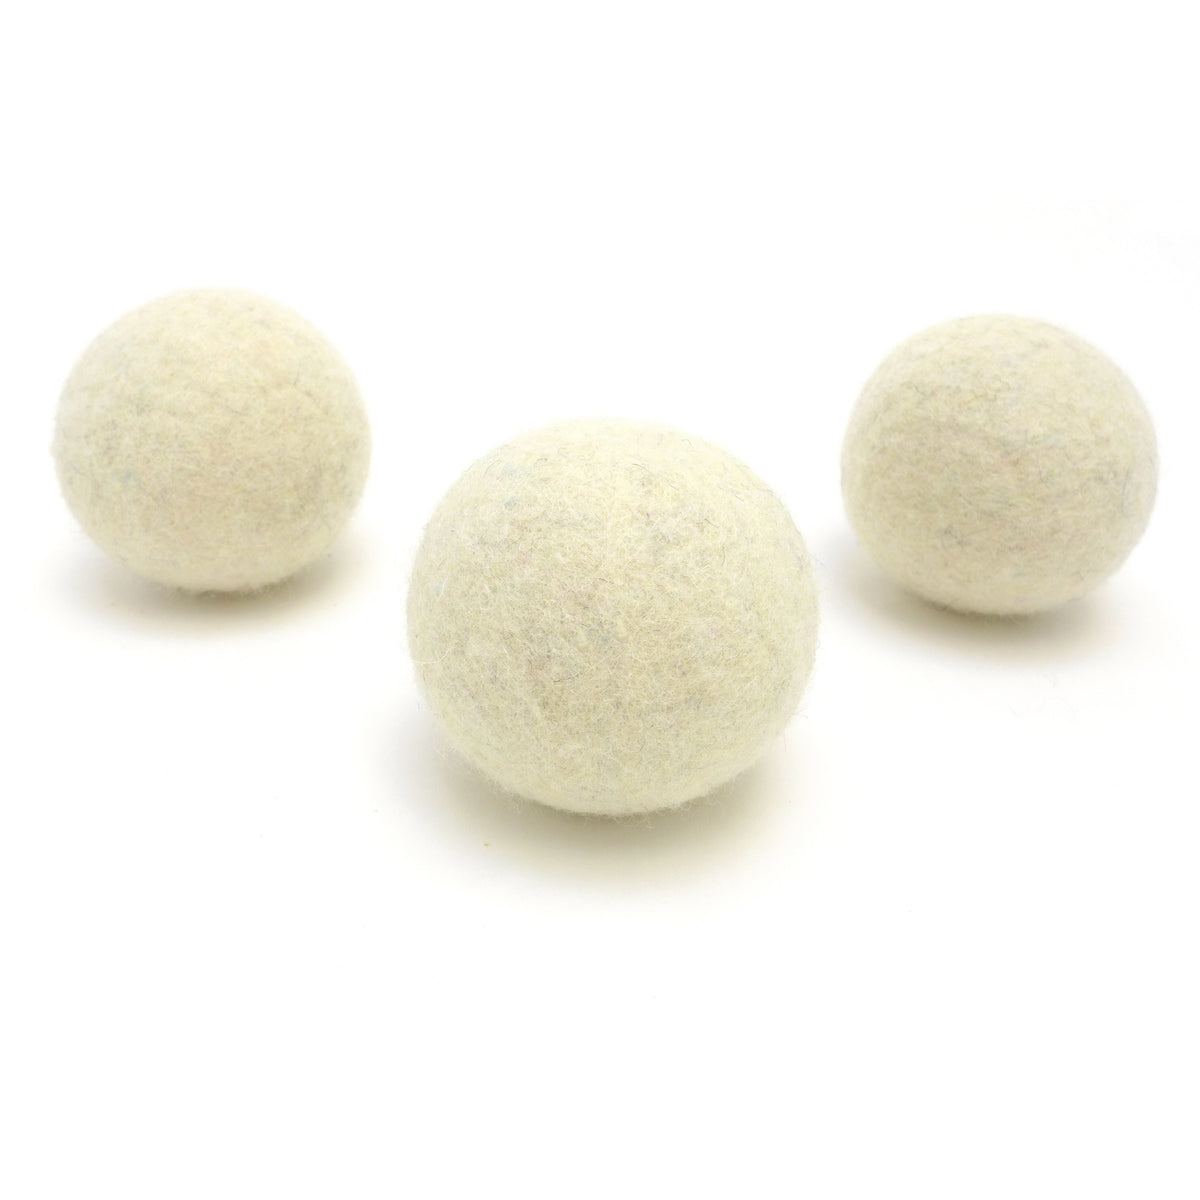 Wool Dryer Balls: Set of 4